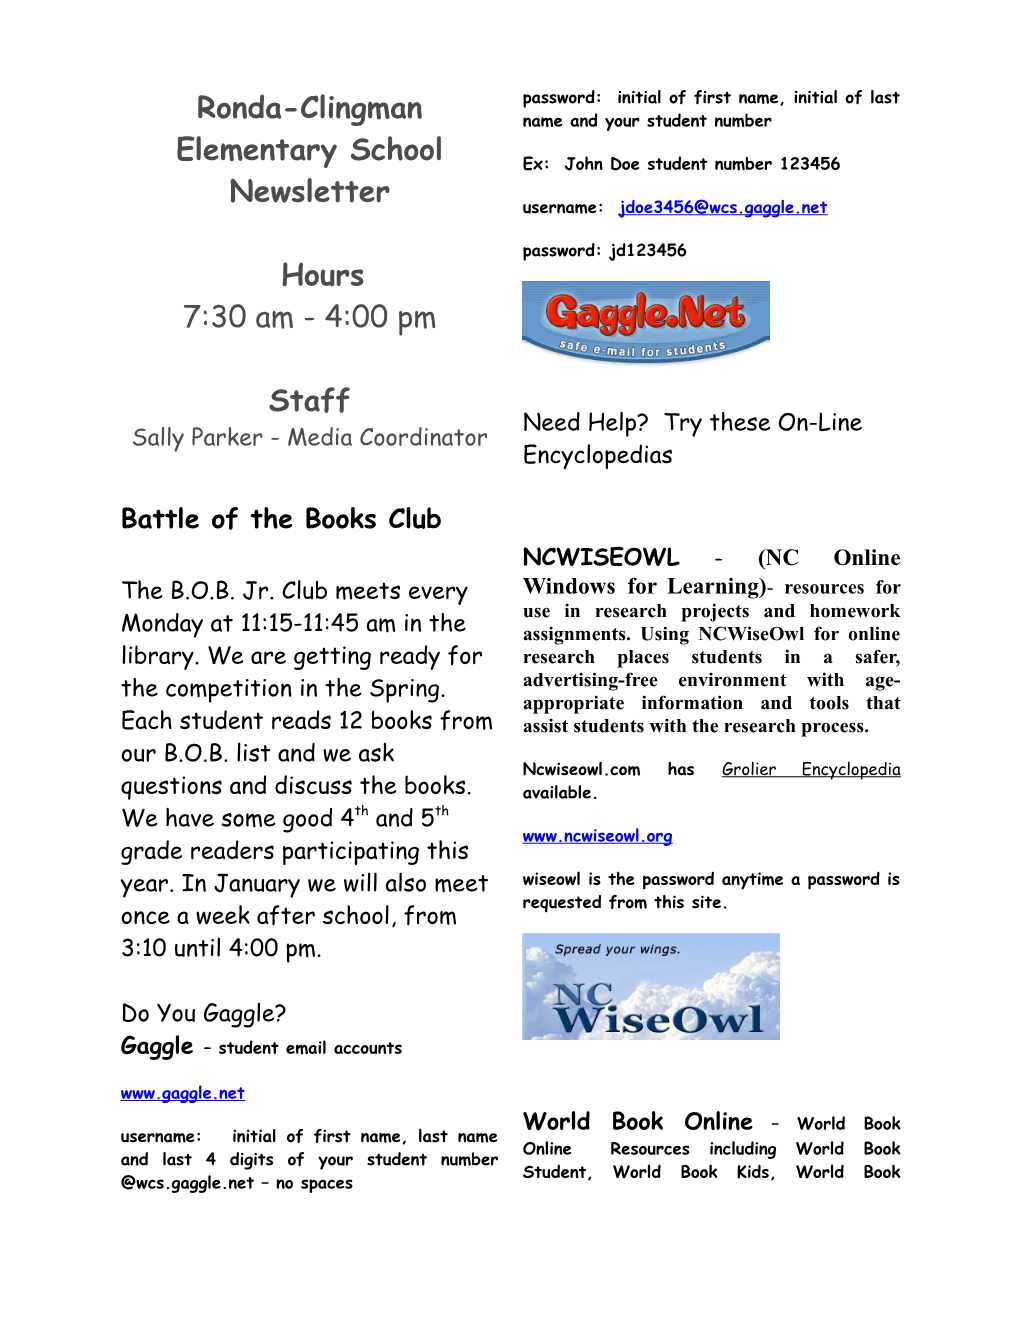 Ronda-Clingman Elementary School Newsletter